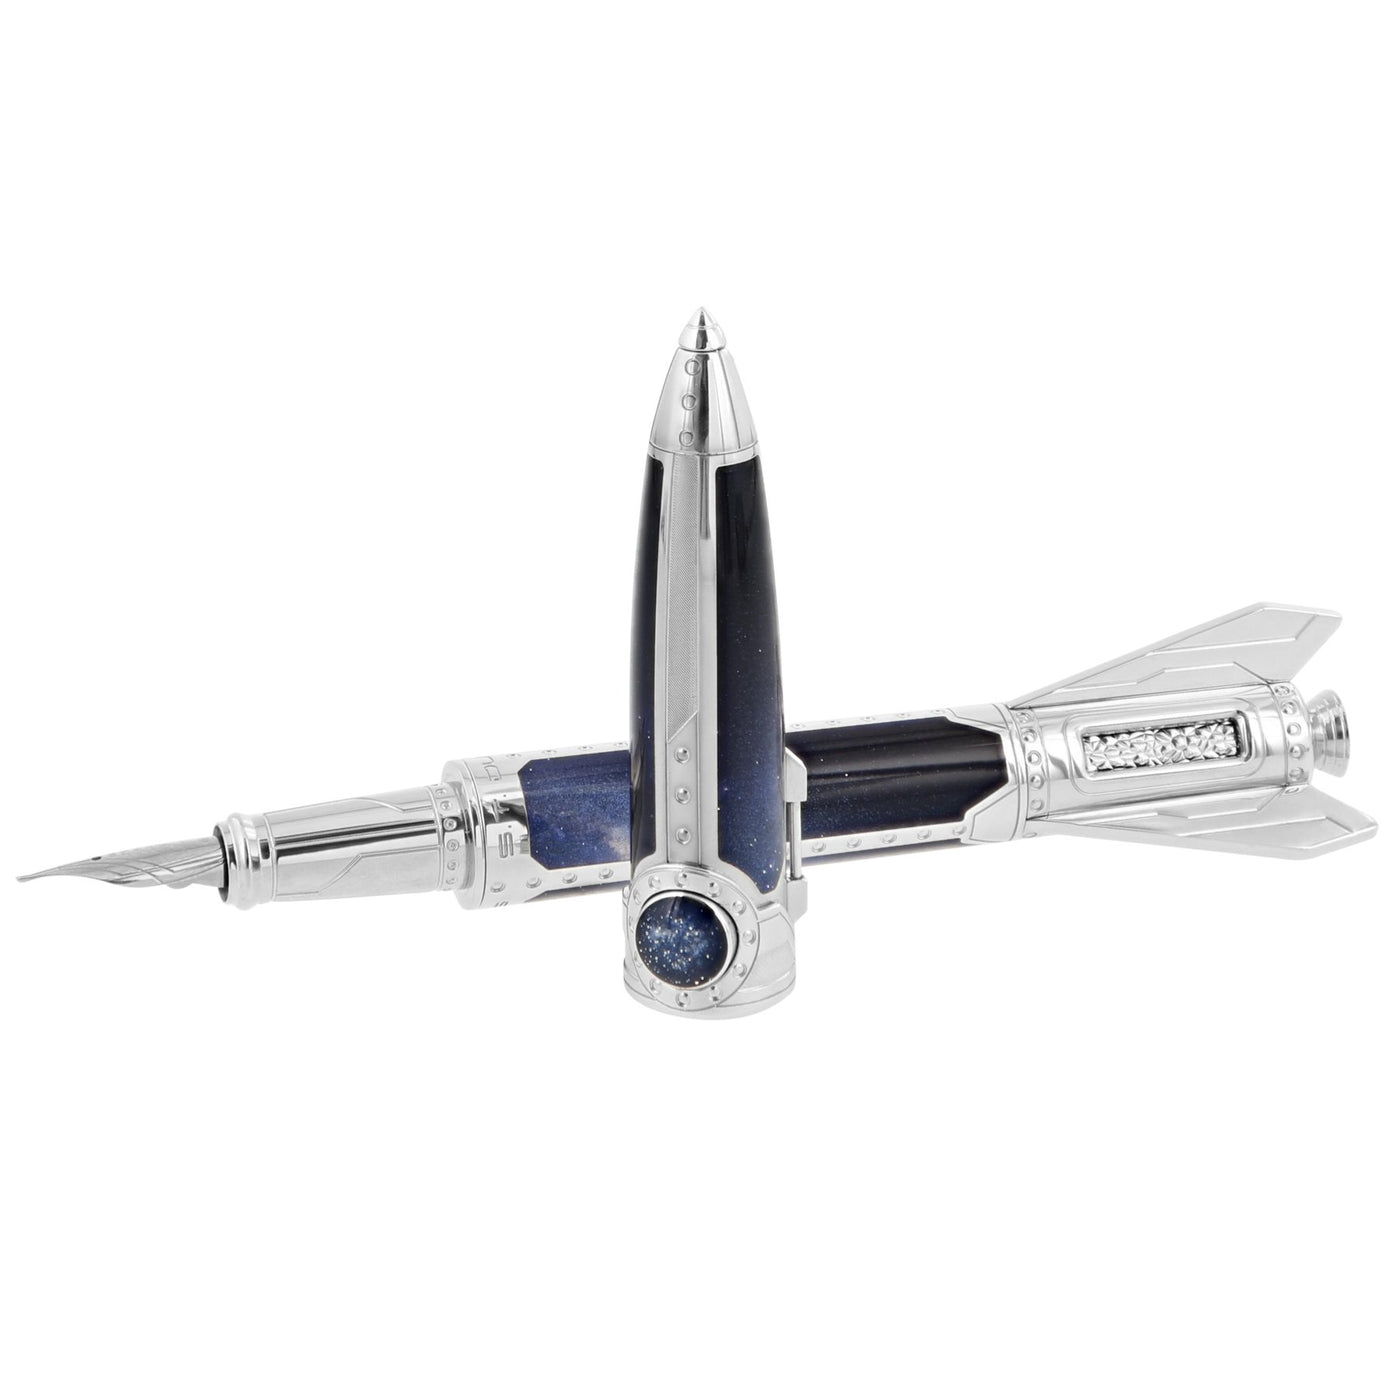 ST Dupont Space Odyssey Prestige Fountain Pen Writing Kit